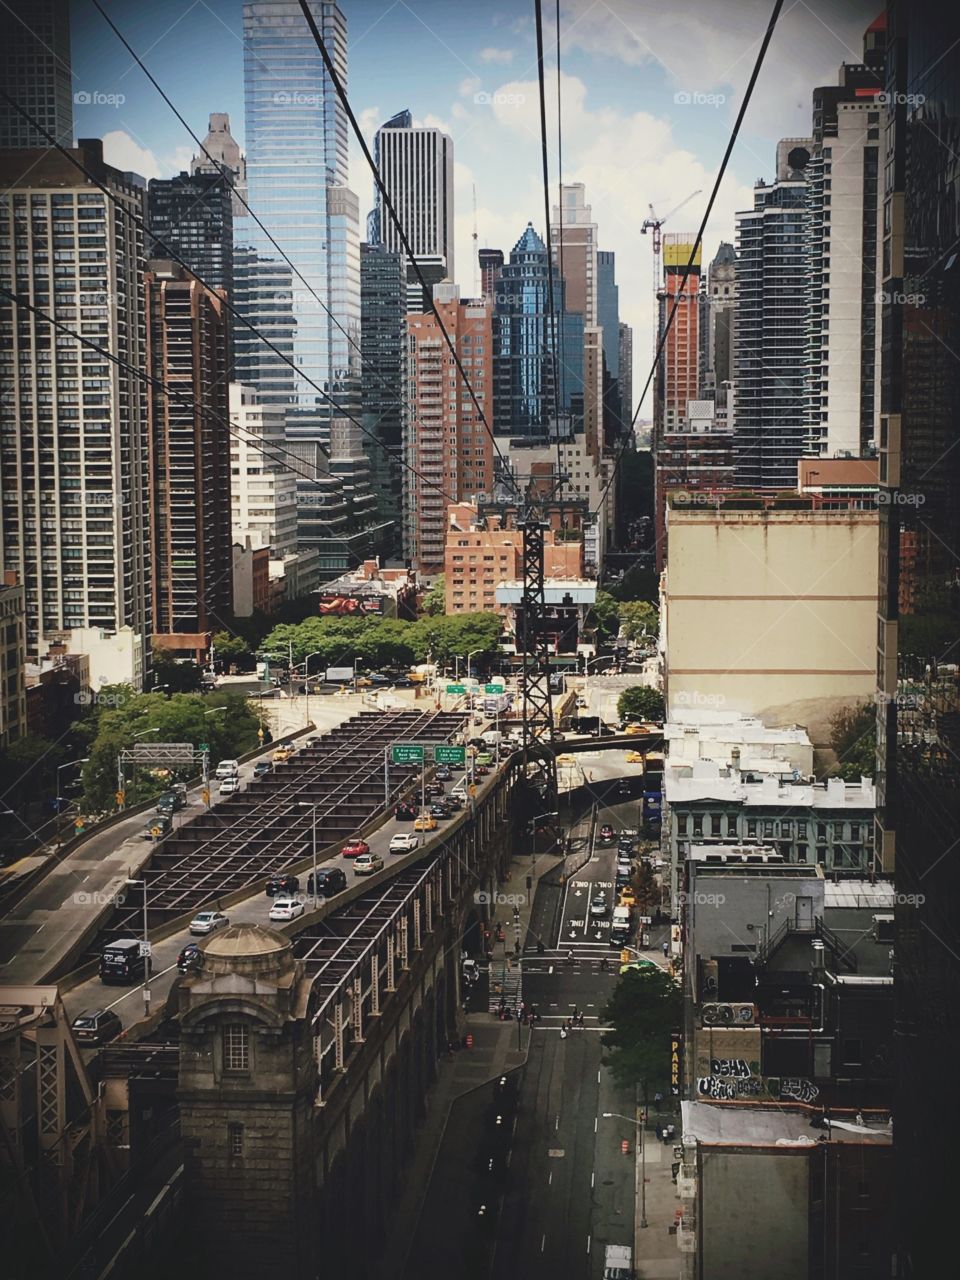 #NewYorkCity #NYCfromtheair #RooseveltIsland #Manhattan #I❤NYV
